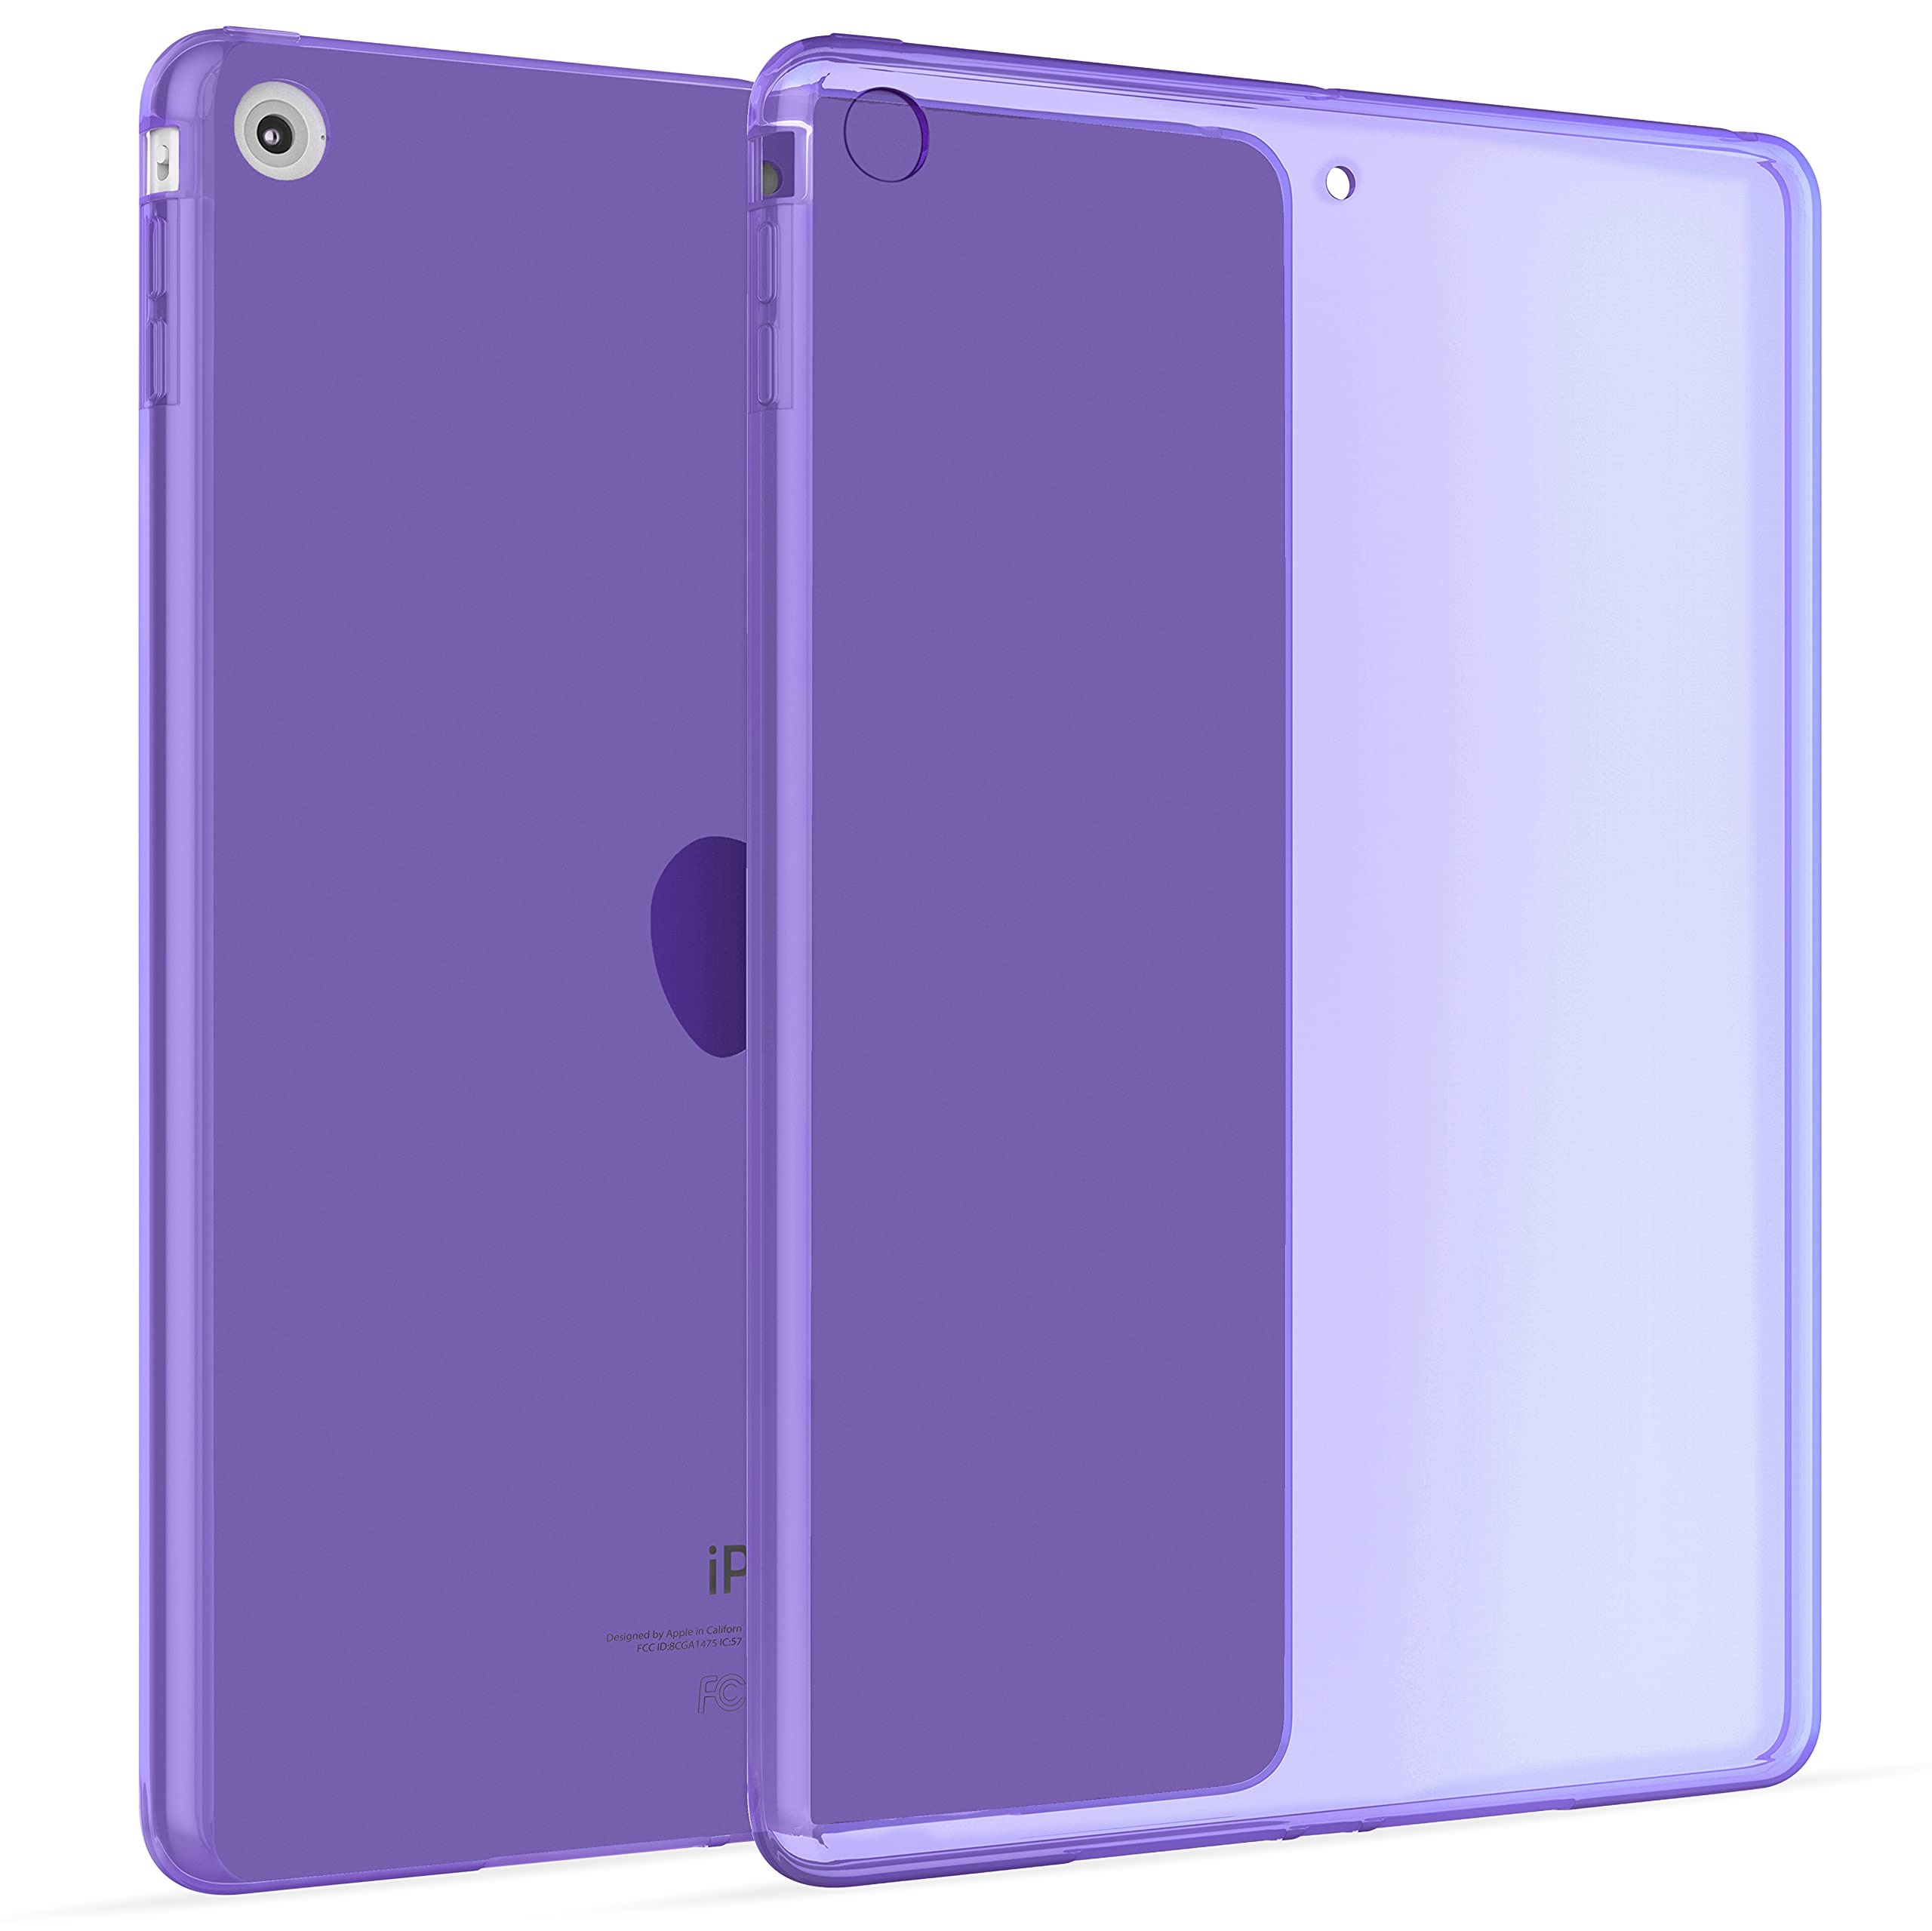 Okuli Hülle Kompatibel mit Apple iPad Mini 1, Mini 2, Mini 3 - Transparent Silikon Cover Case Schutzhülle in Lila